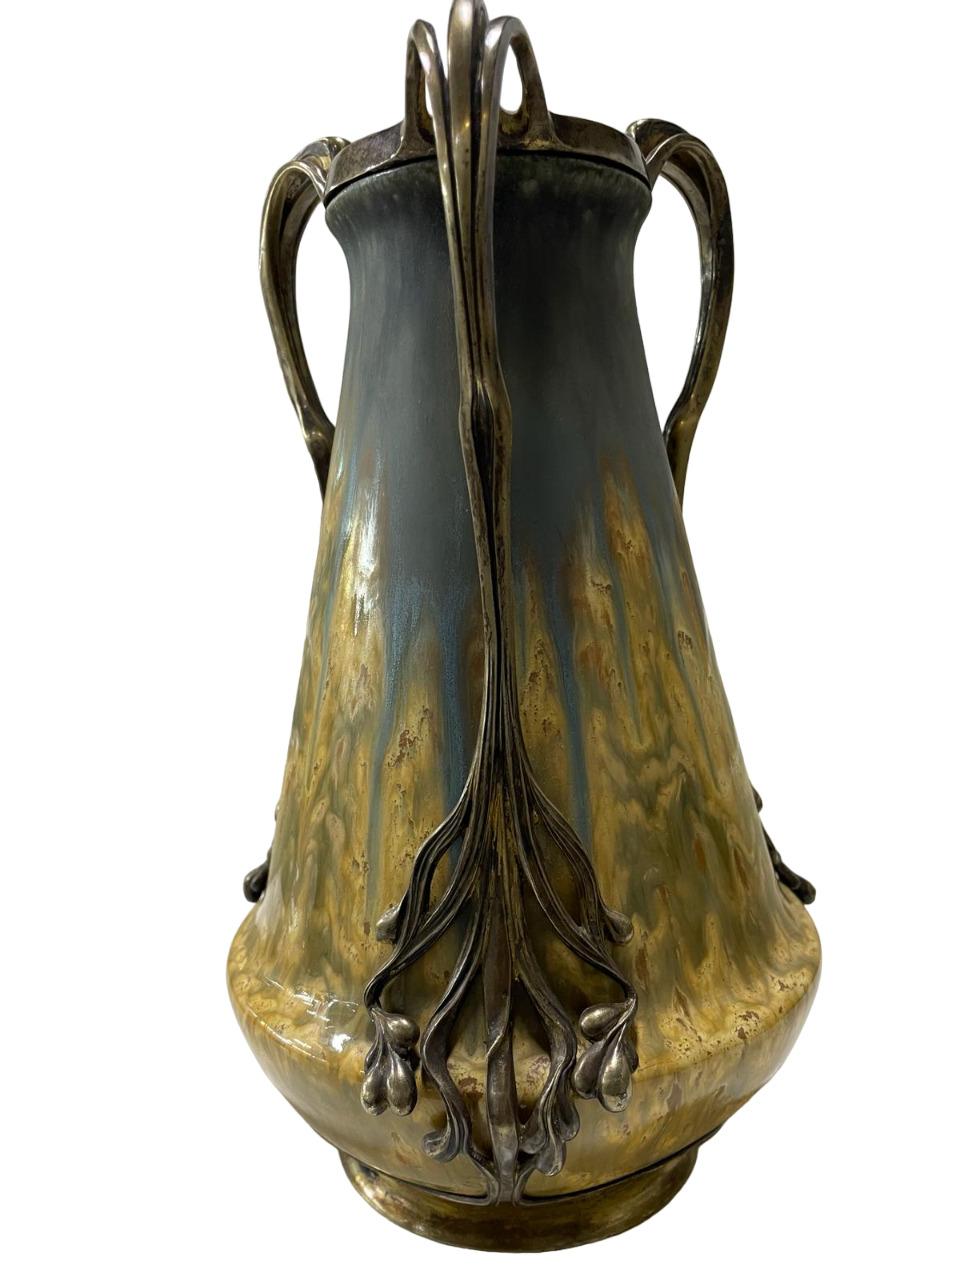 STUNNING Art Nouveau ORIVIT Gilt Bronze Mounted Glazed Ceramic VASE 1894 For Sale 2